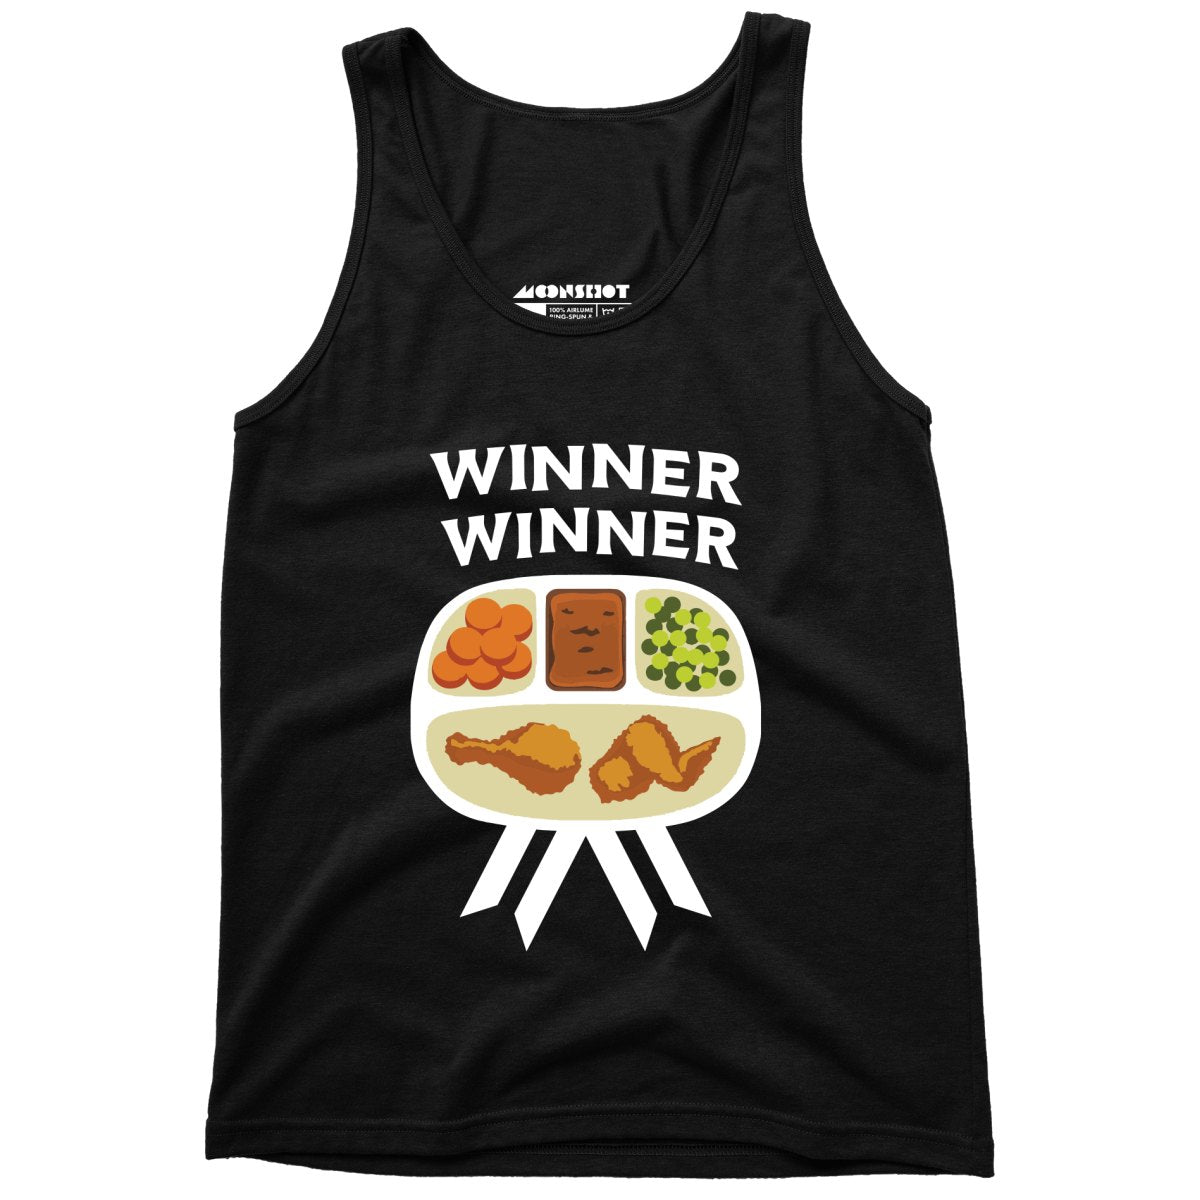 Winner Winner Chicken Dinner - Unisex Tank Top